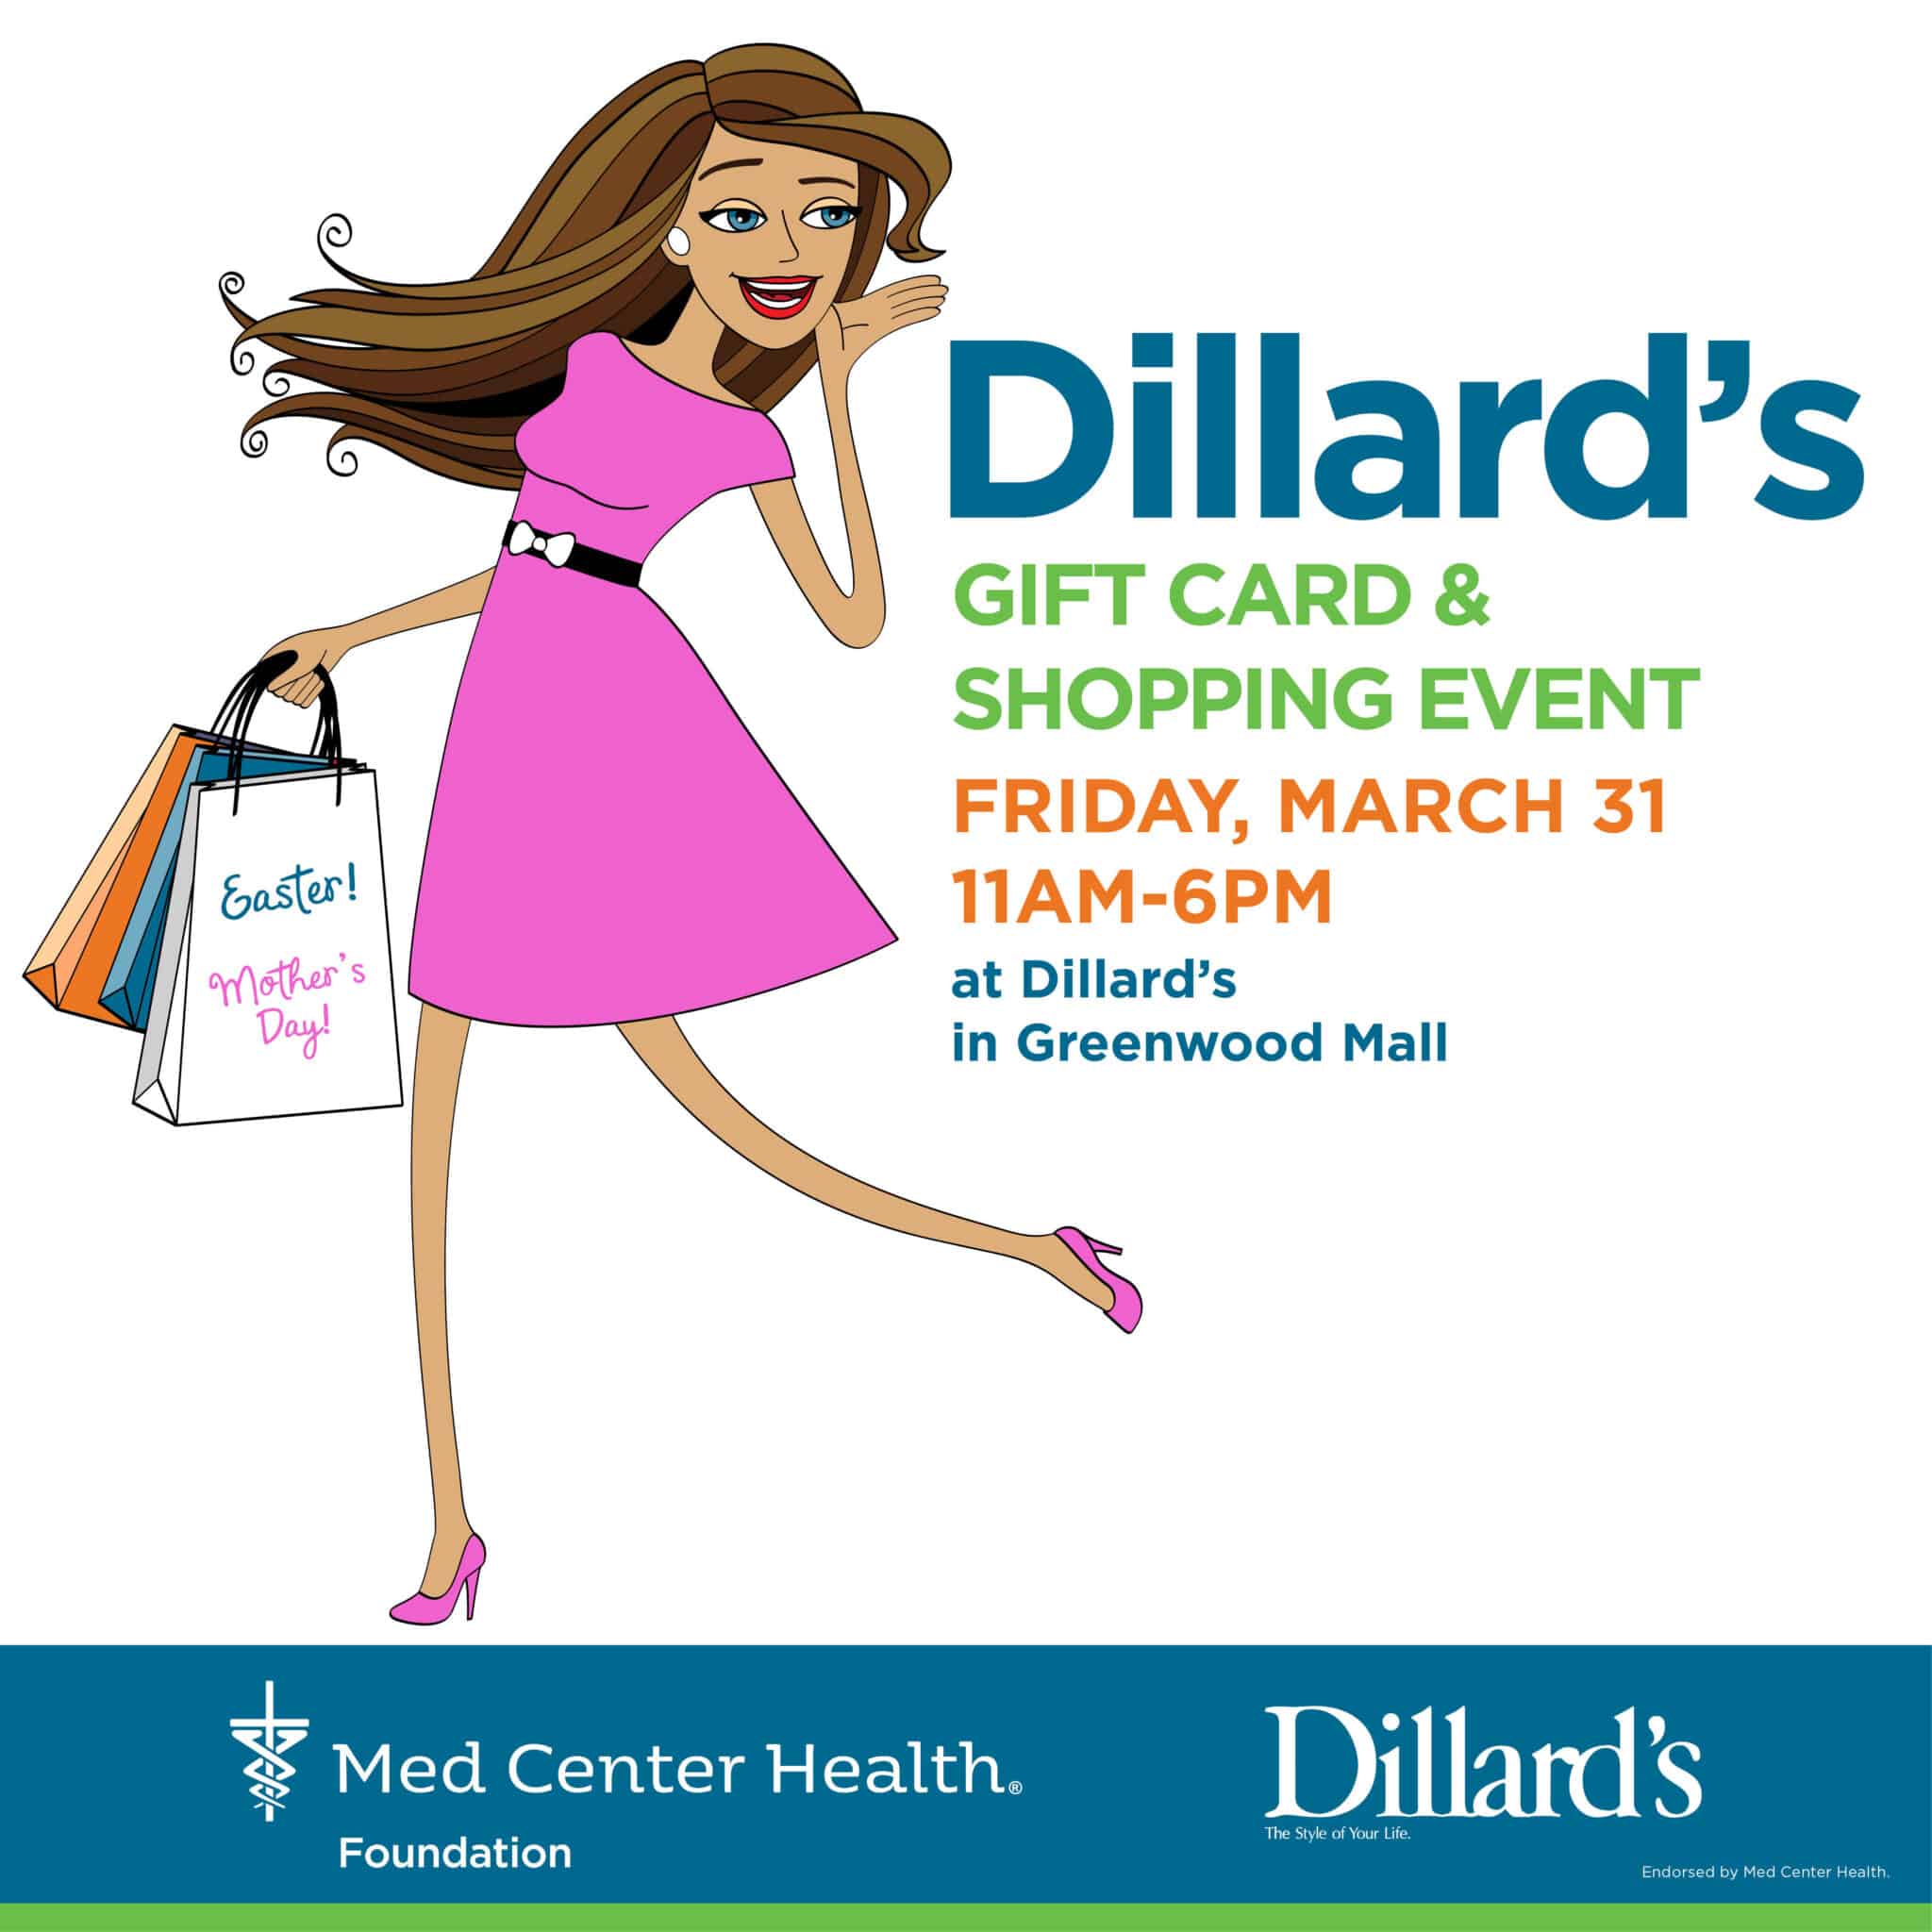 Dillard's shopping event